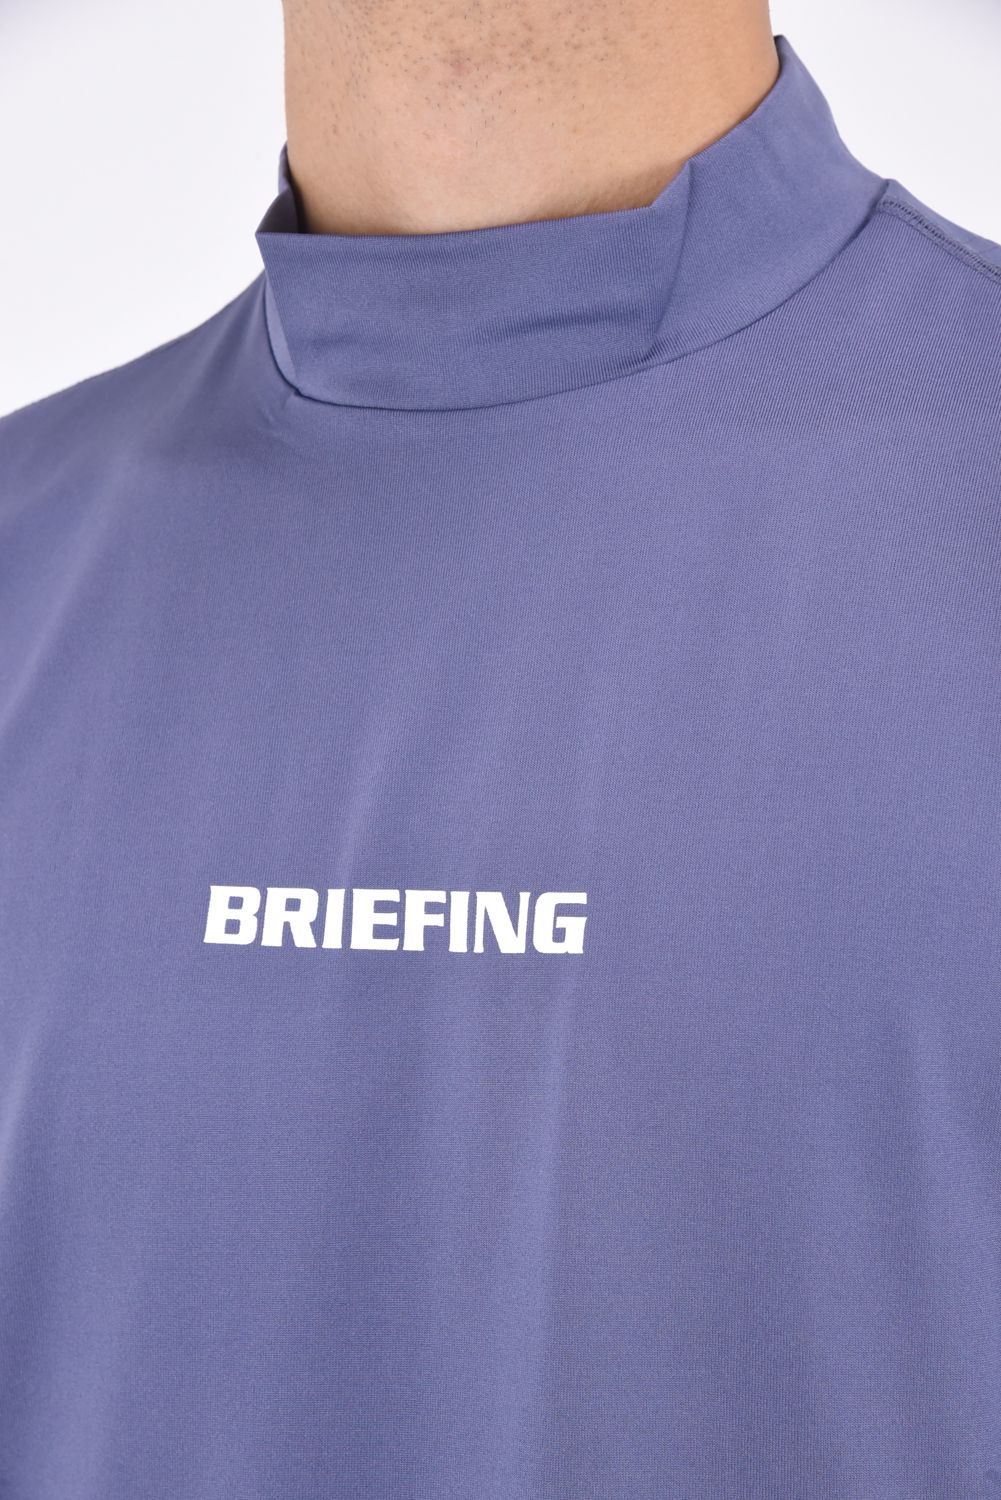 BRIEFING - MENS TOUR LS HIGH NECK BBG231 / ブランドロゴ ロング 